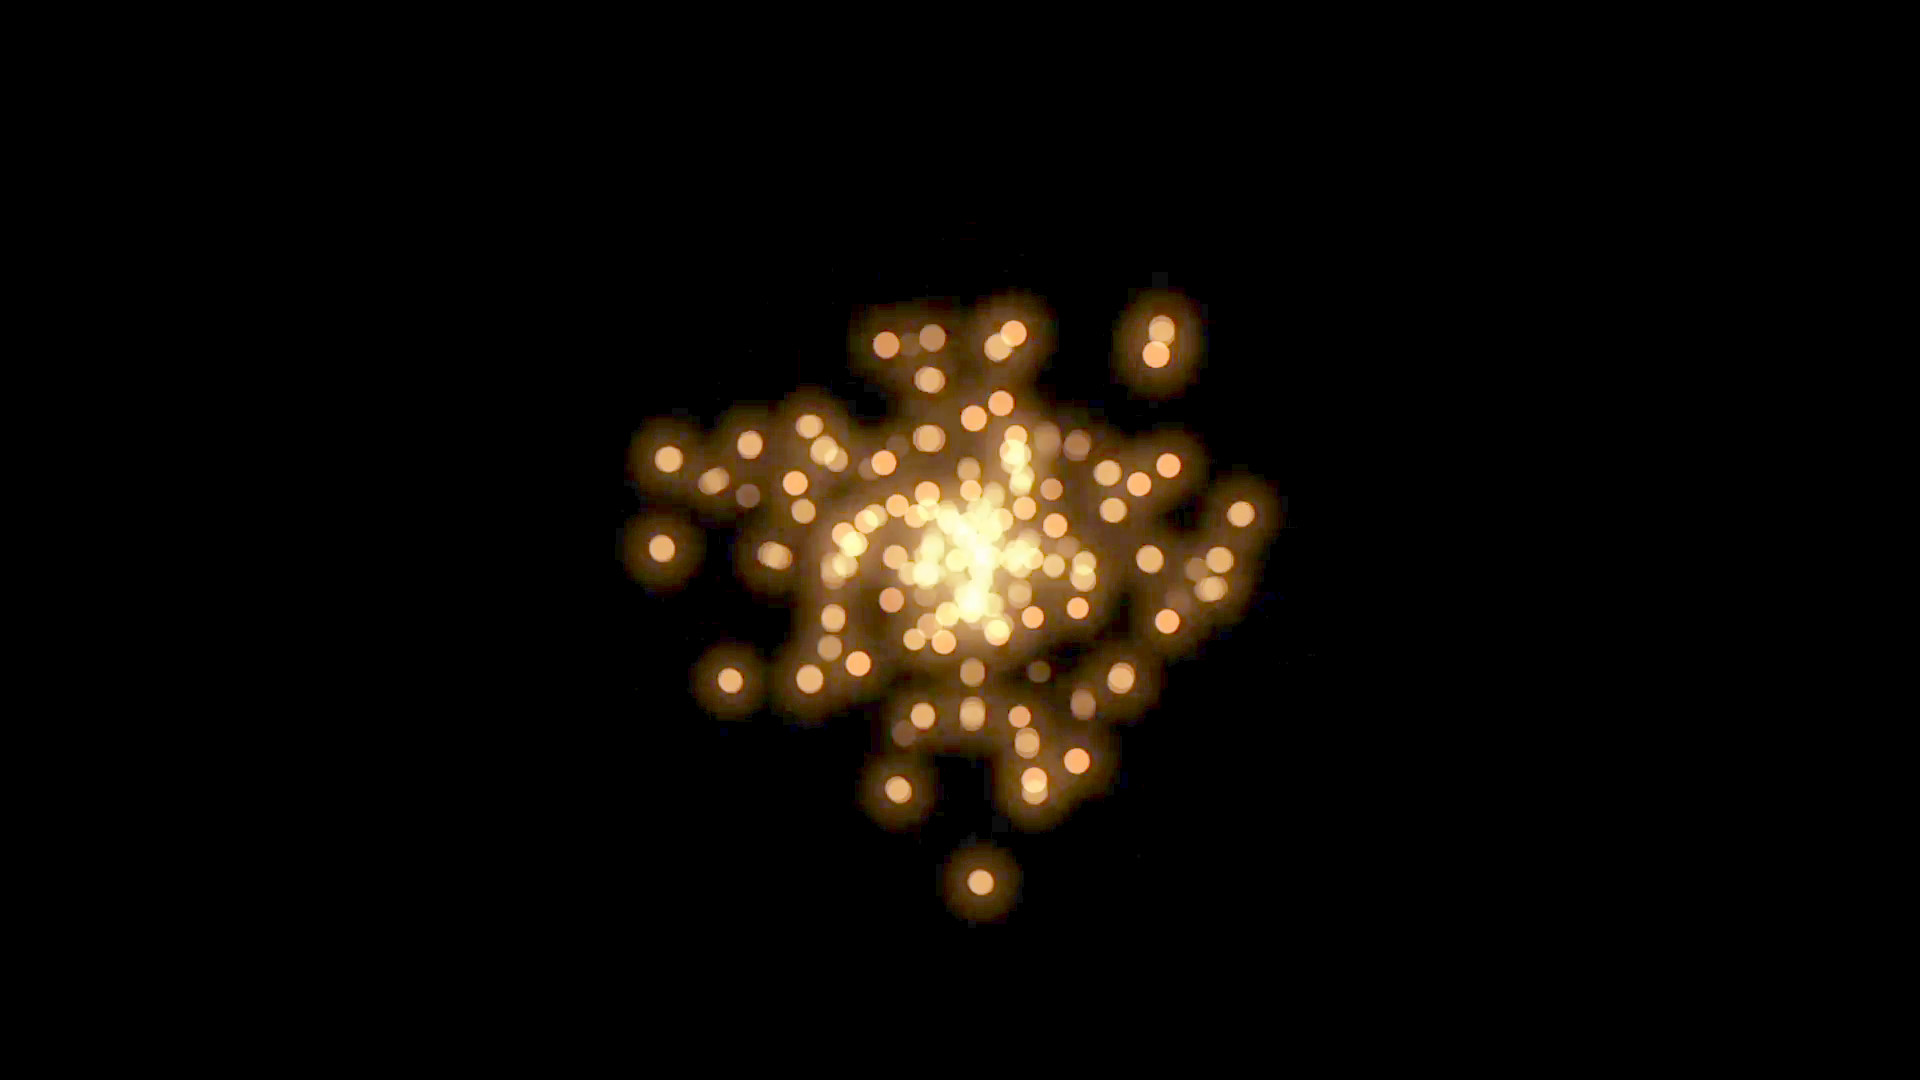 1920x1080 Swarm of Fireflies Animation on a Black Background